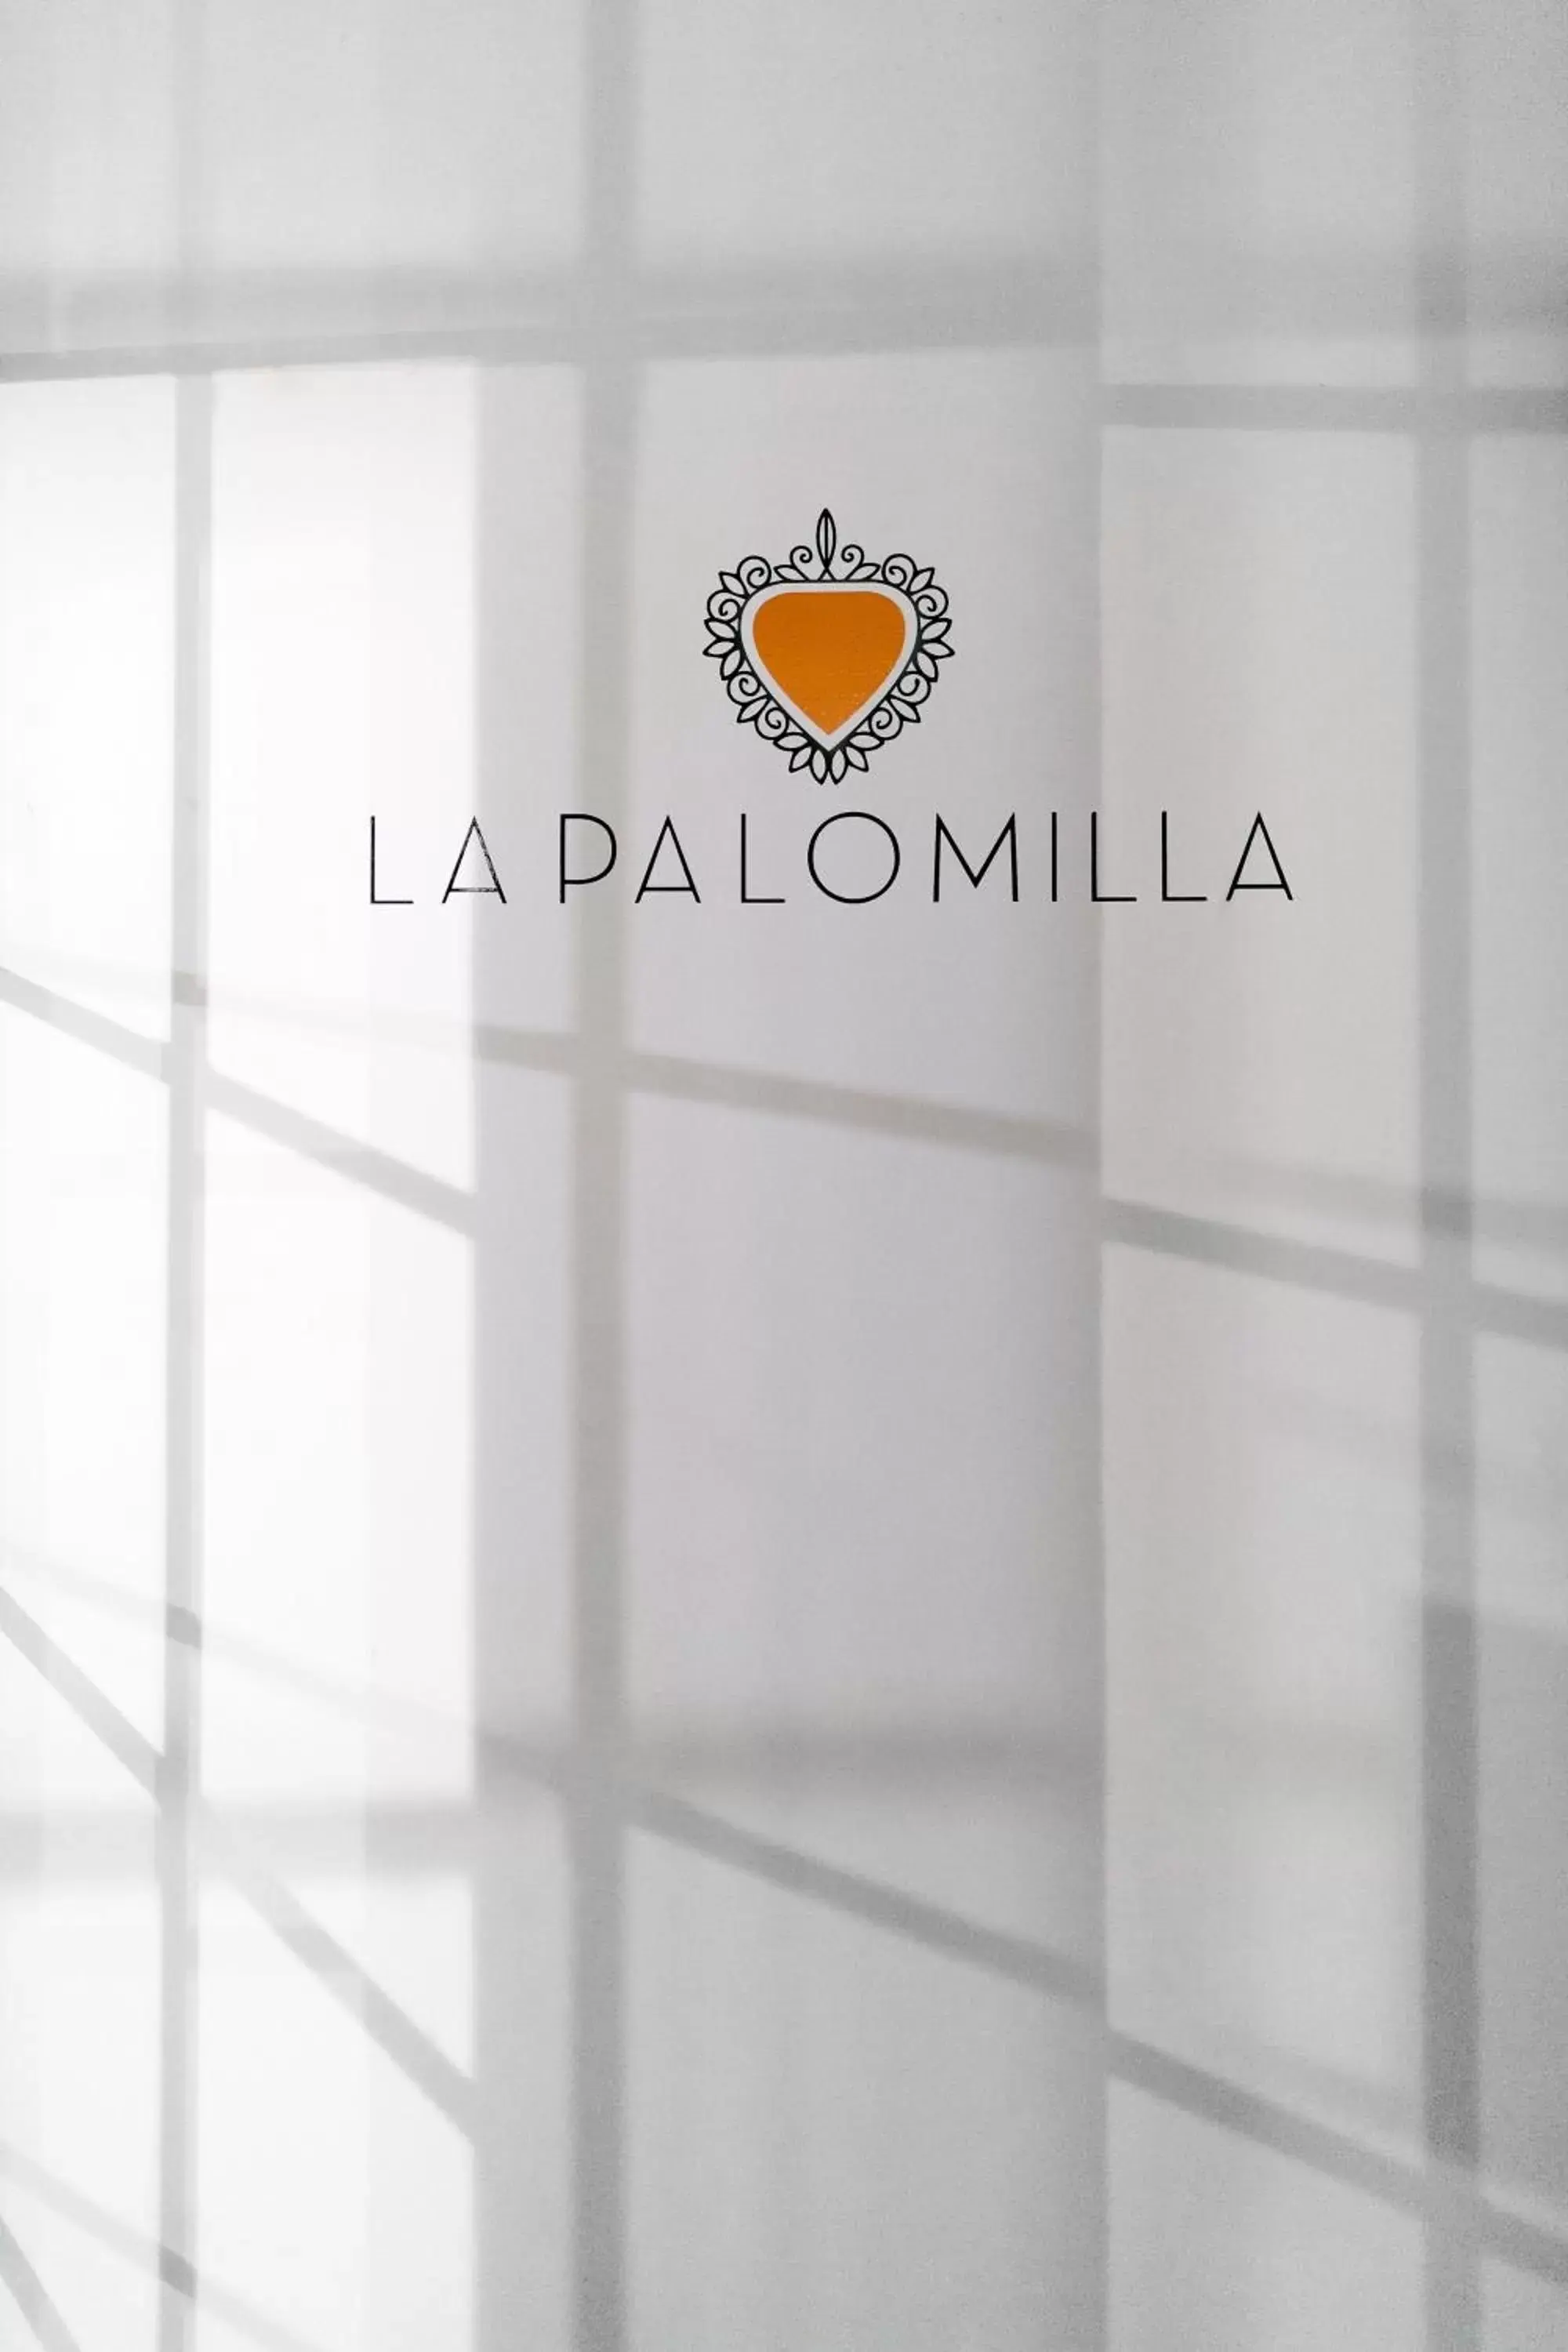 Property logo or sign in La Palomilla Bed & Breakfast